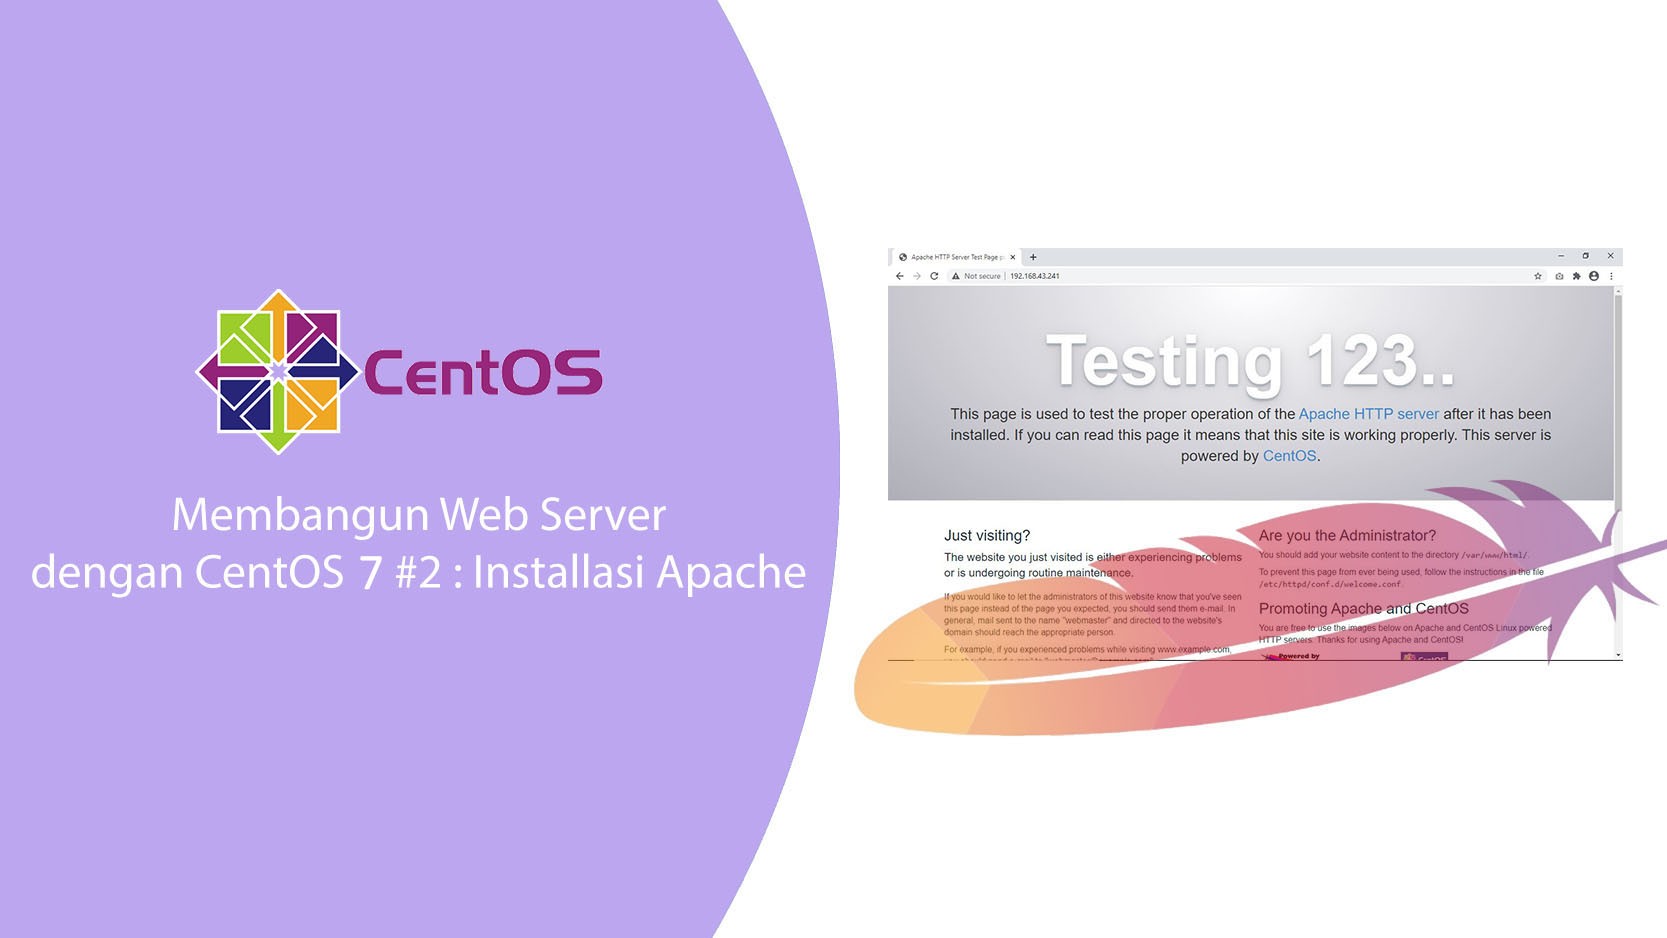 Membangun Web Server CentOS 7 #2 : Installasi Apache